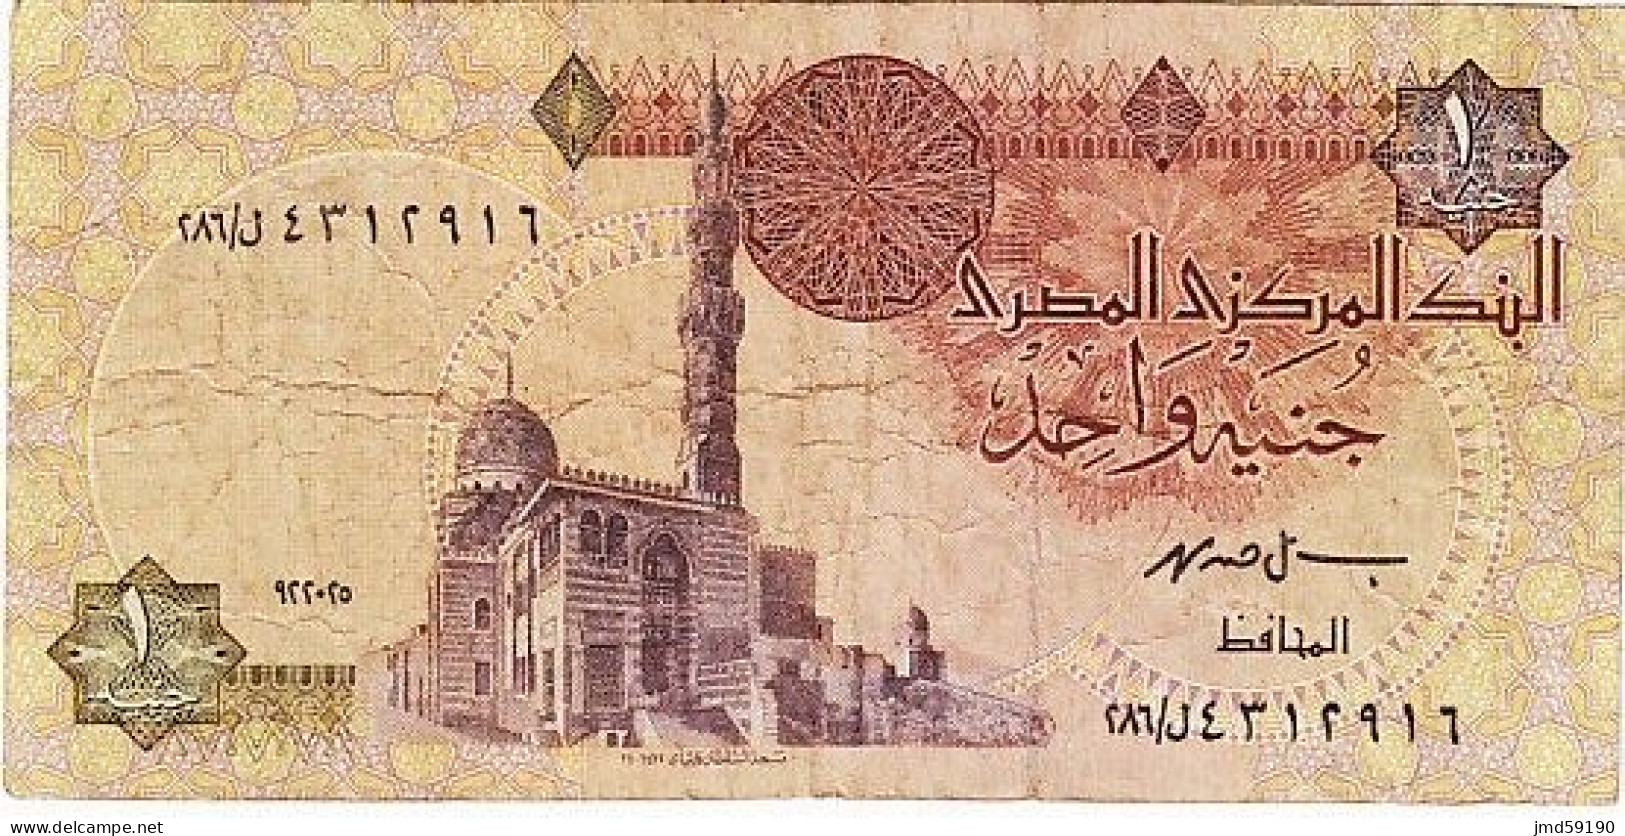 EGYPTE - Billet De ONE POUND - Egipto